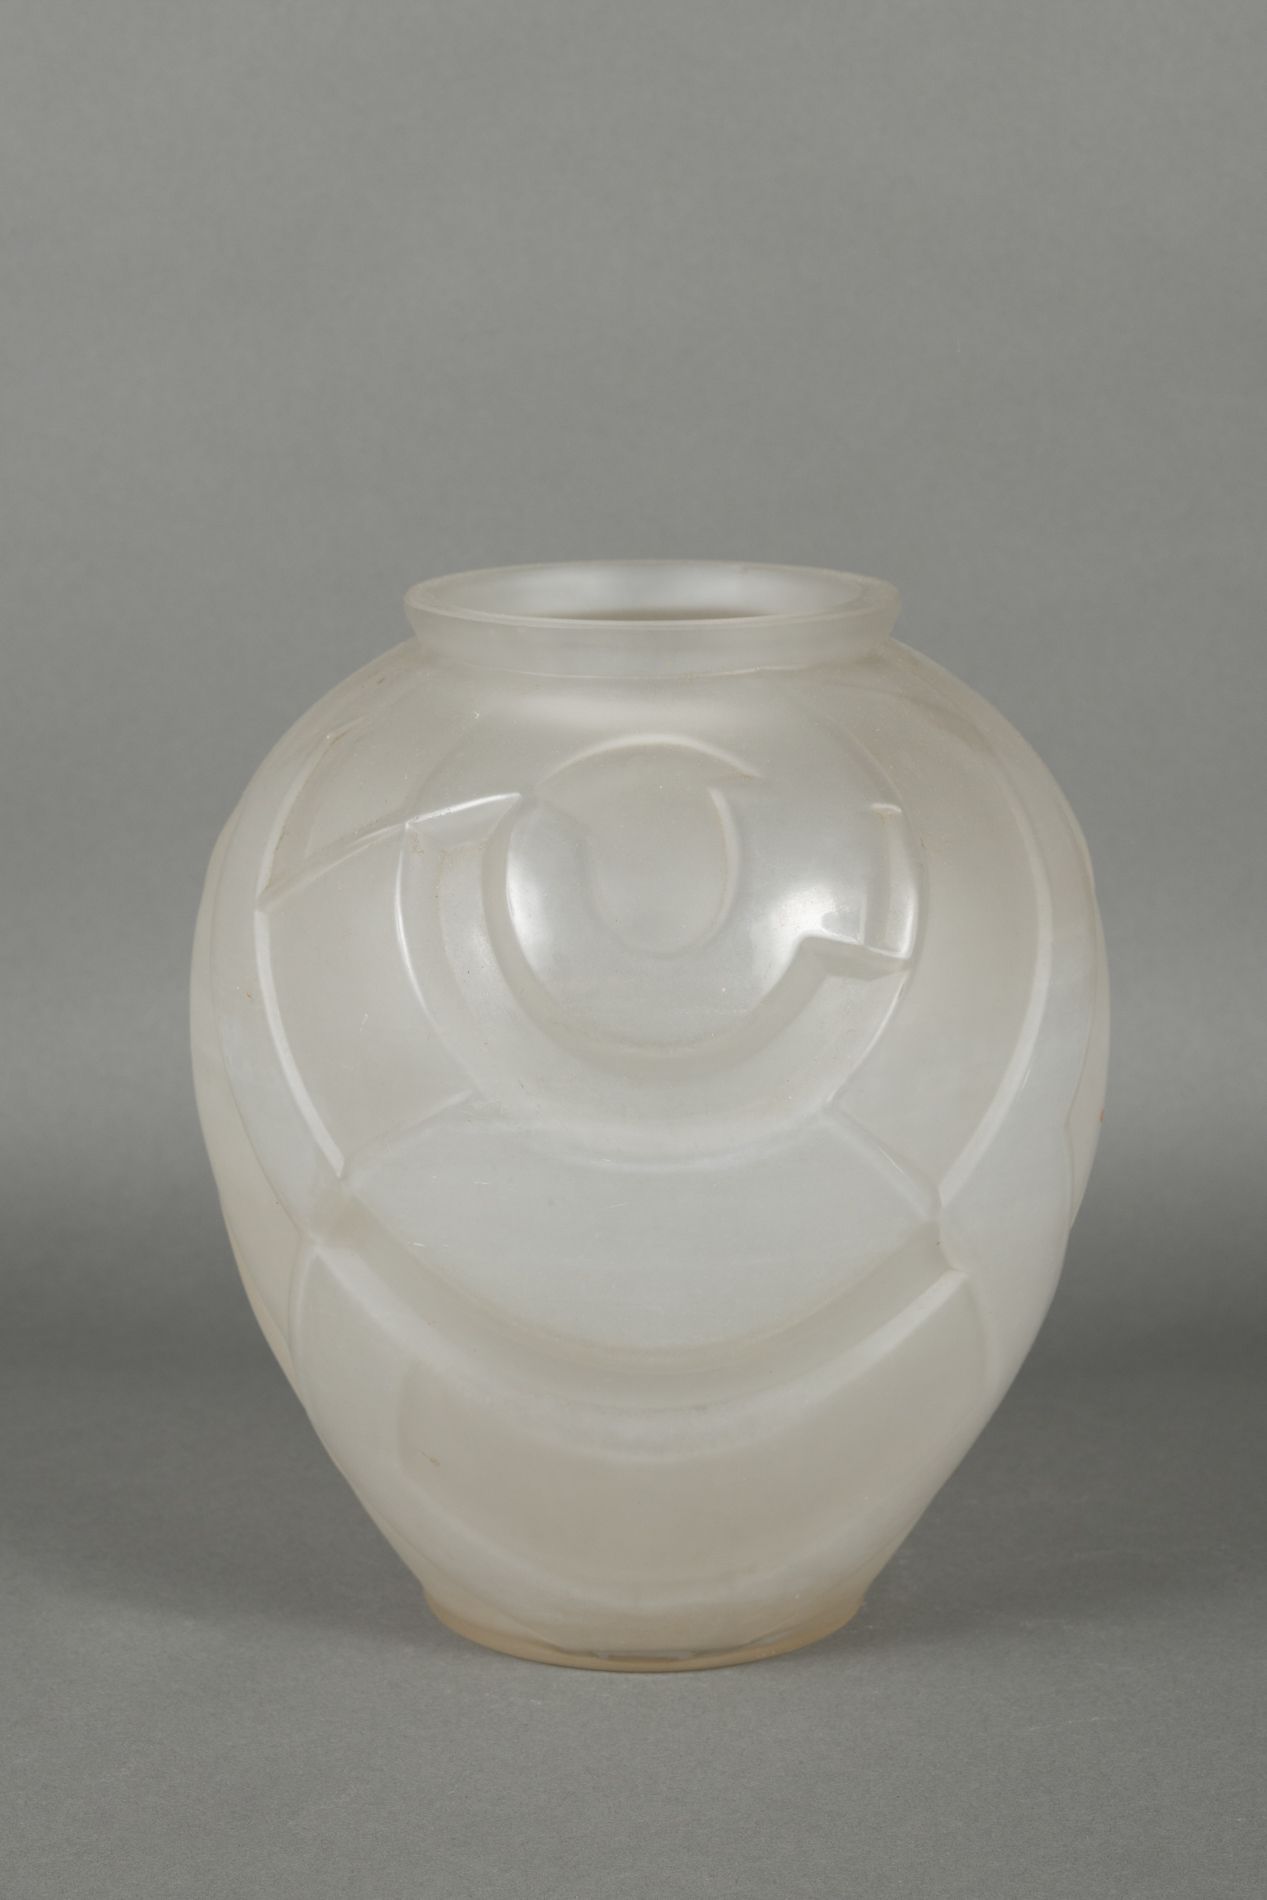 Null 安德烈-胡内贝尔(1896-1985)
压制成型的玻璃卵形花瓶，有几何装饰。已签名。 
H.21厘米